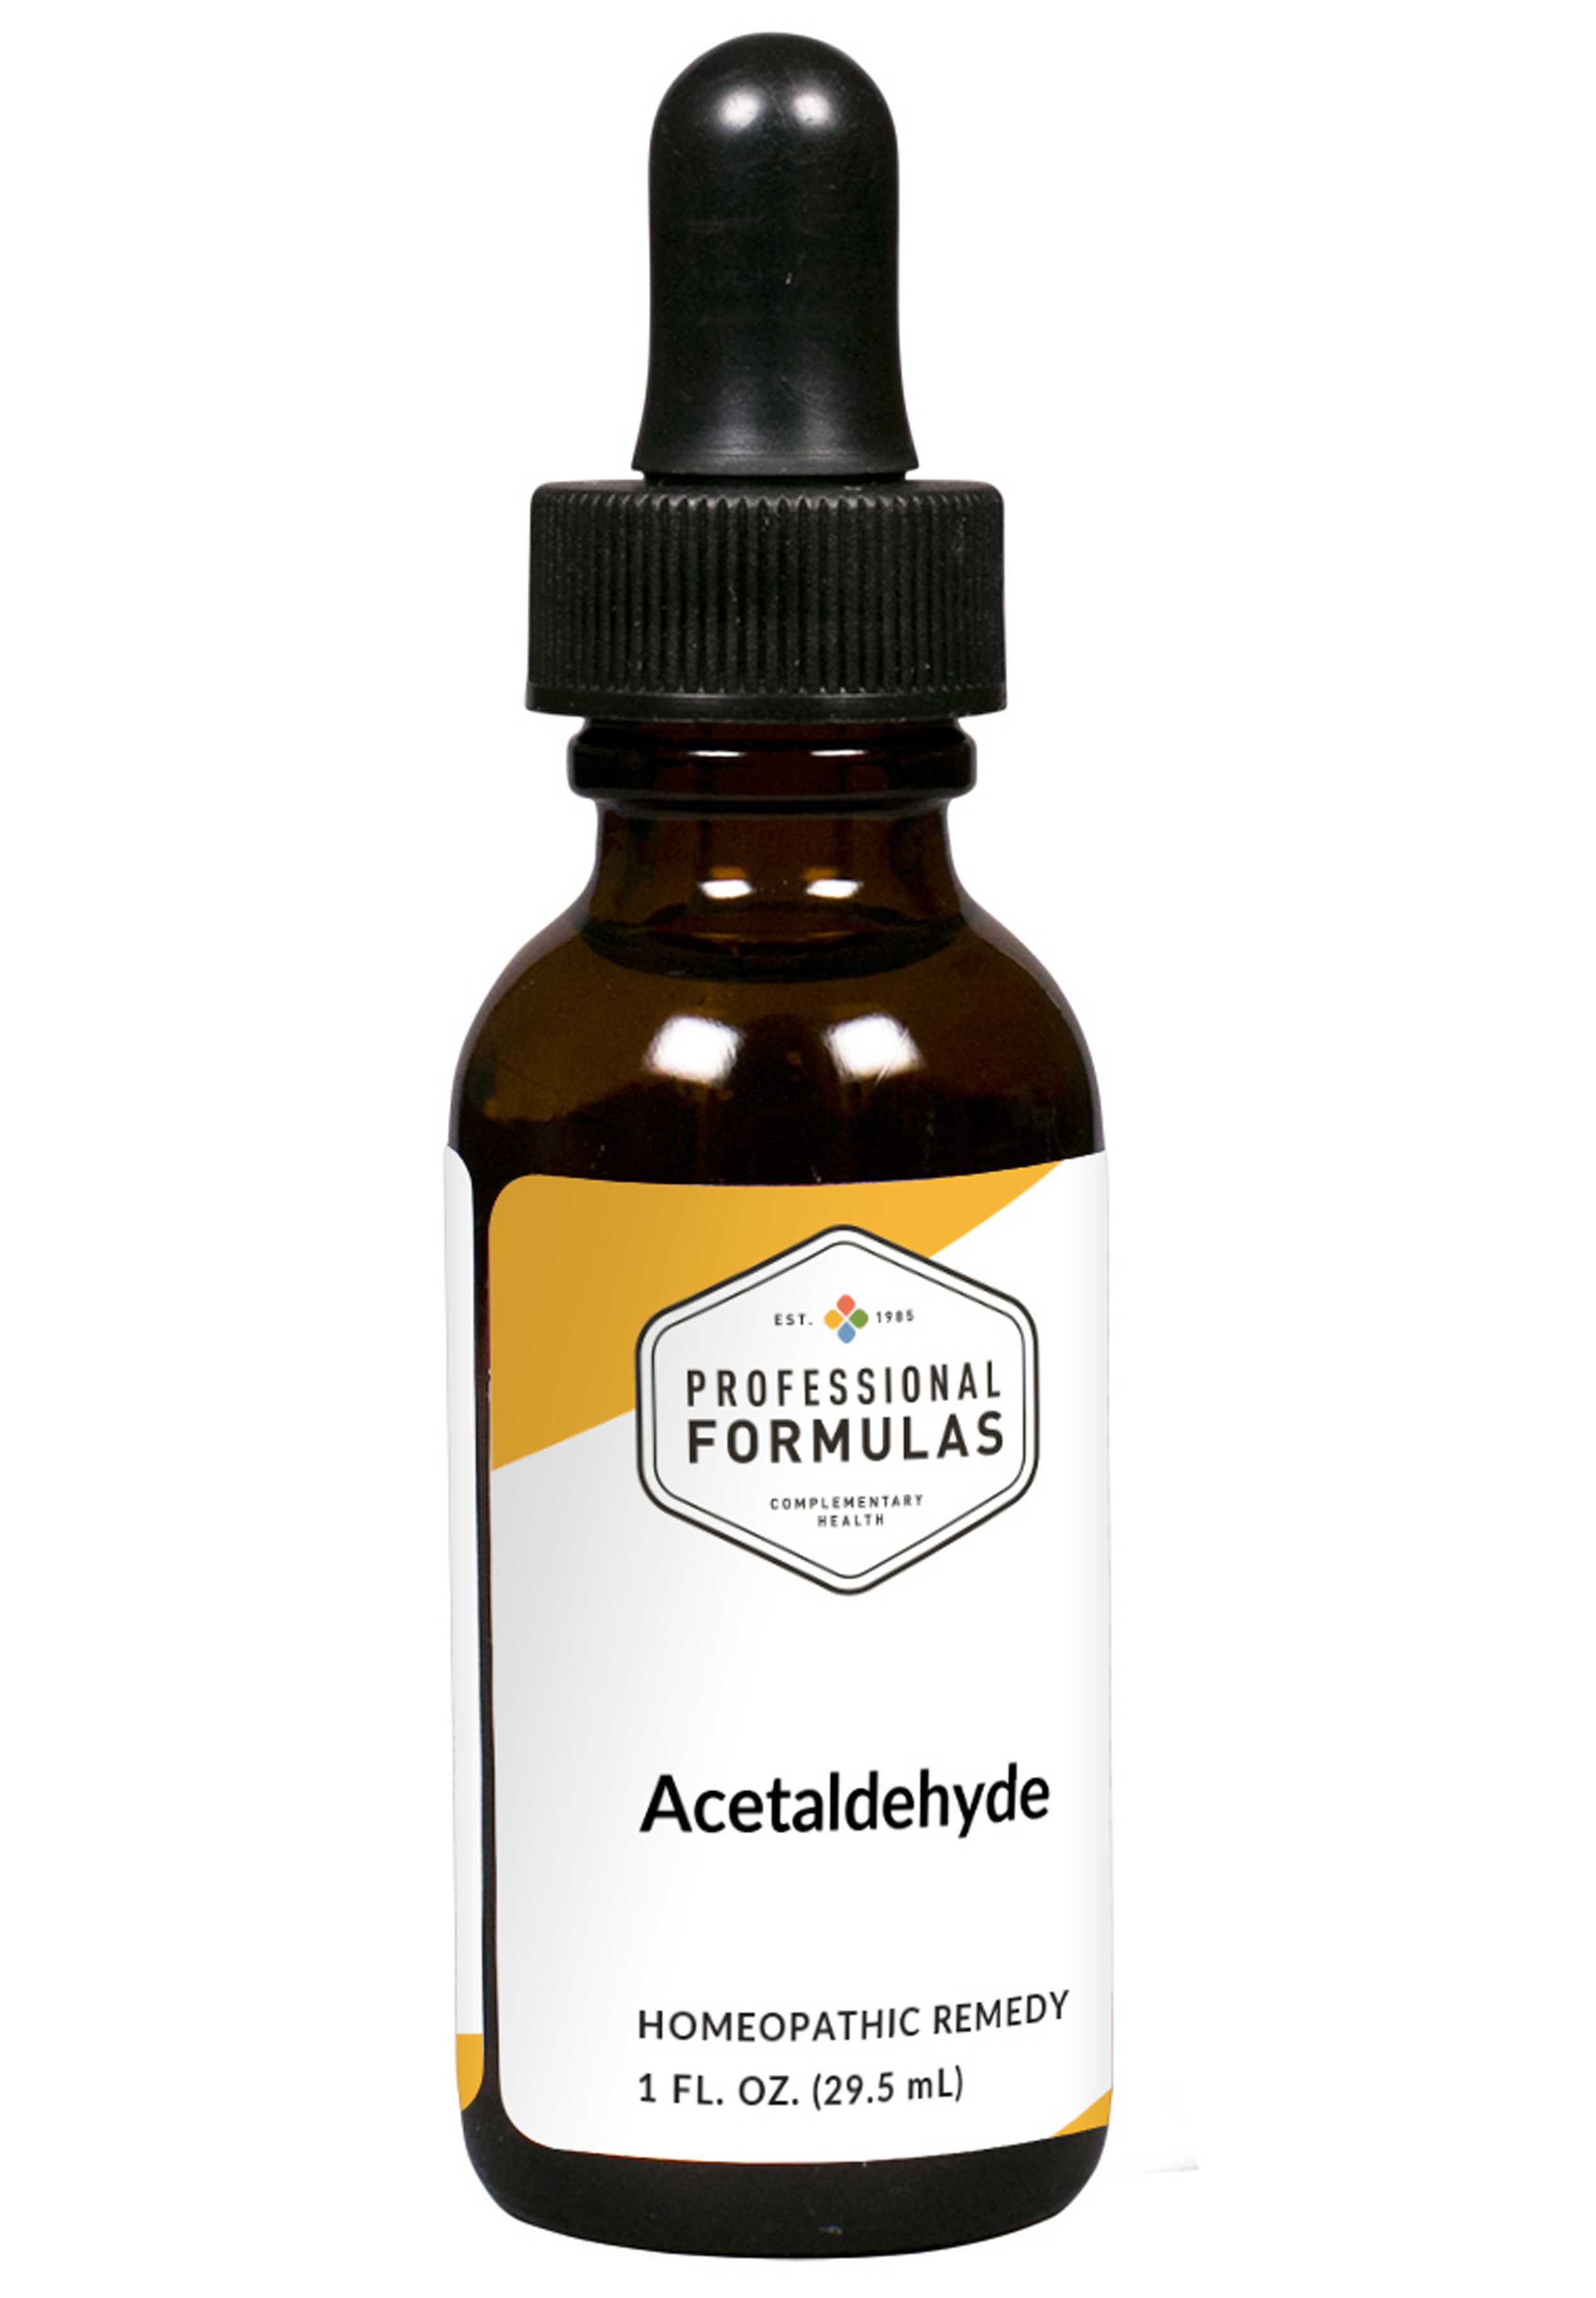 Professional Formulas Acetaldehyde